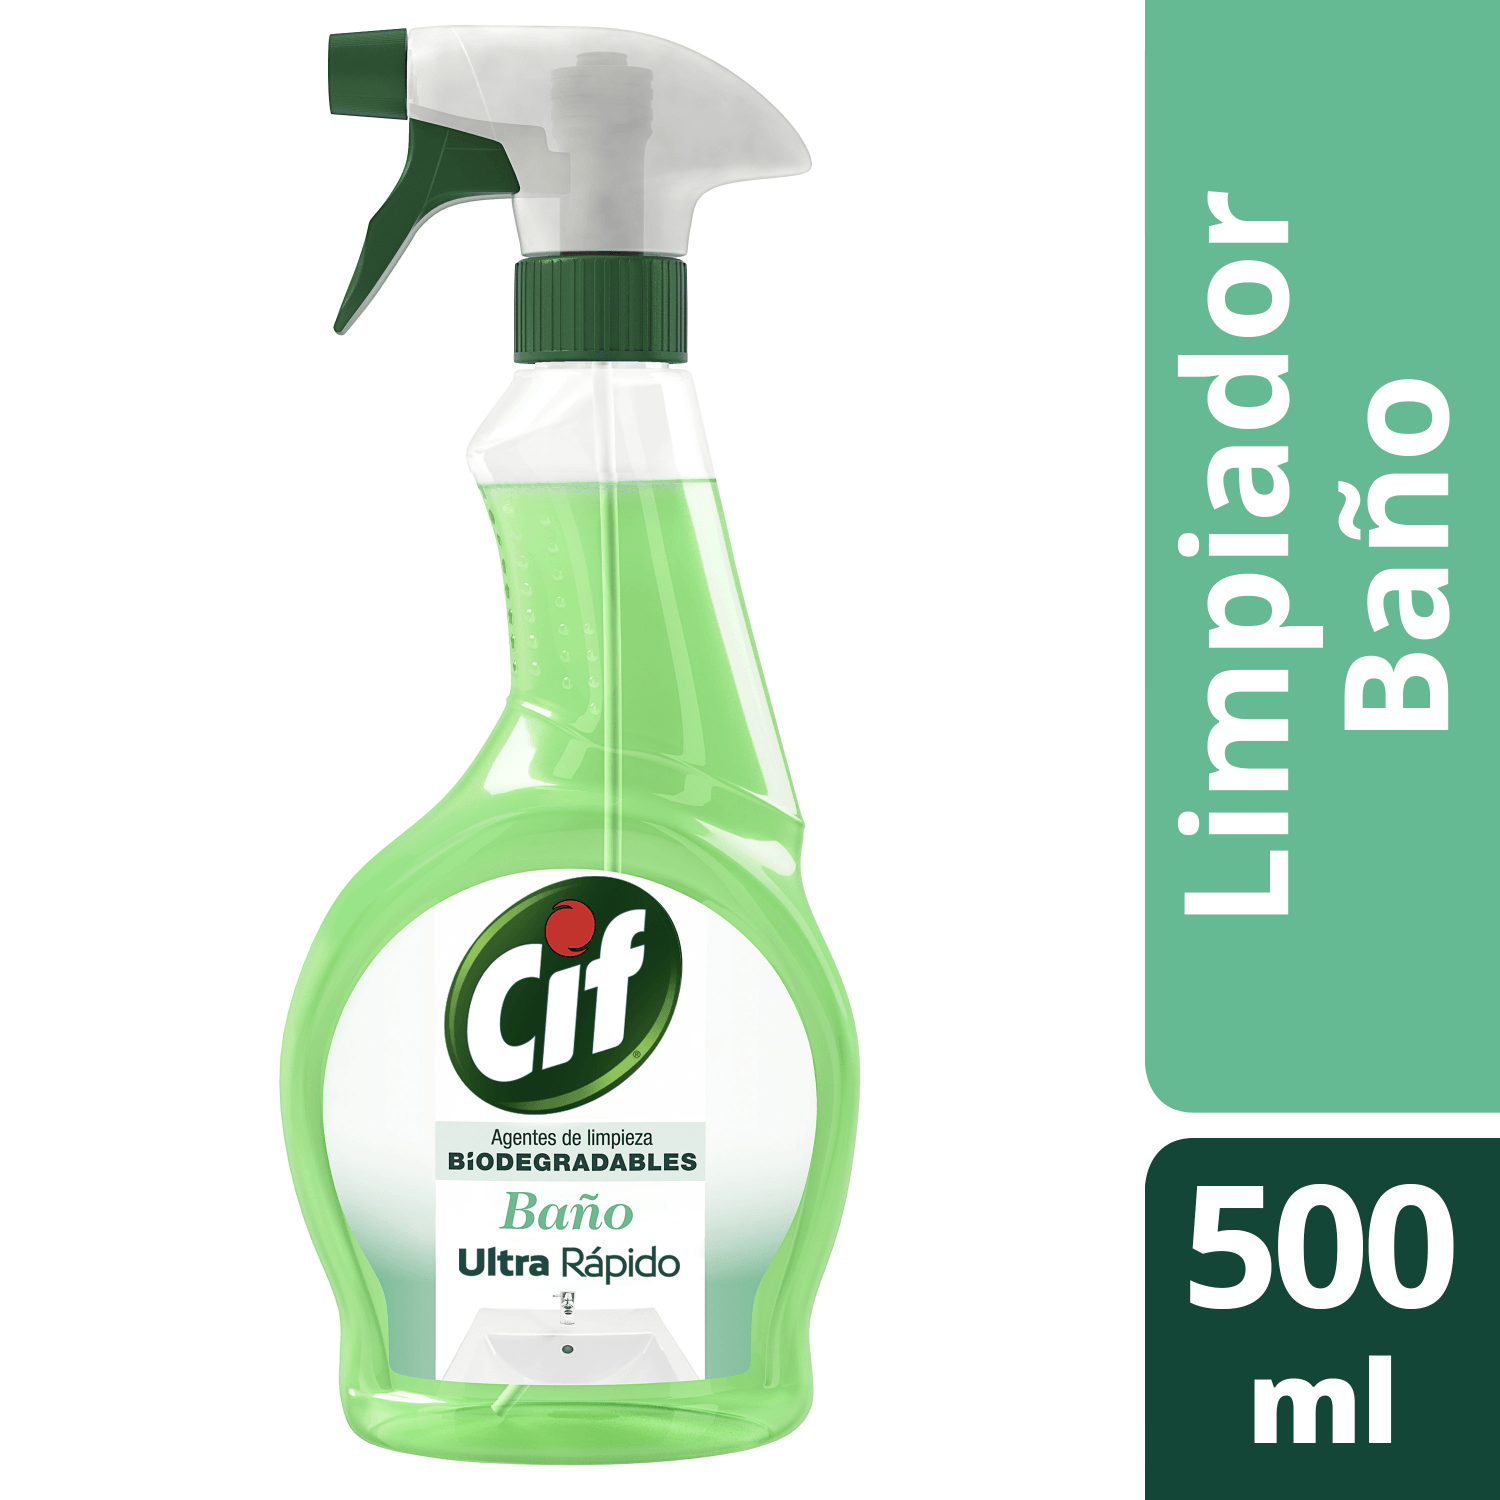 https://jumbo.vtexassets.com/arquivos/ids/446778/Limpiador-ba%C3%B1o-biodegradable-gatillo-500-ml.jpg?v=637630984349670000